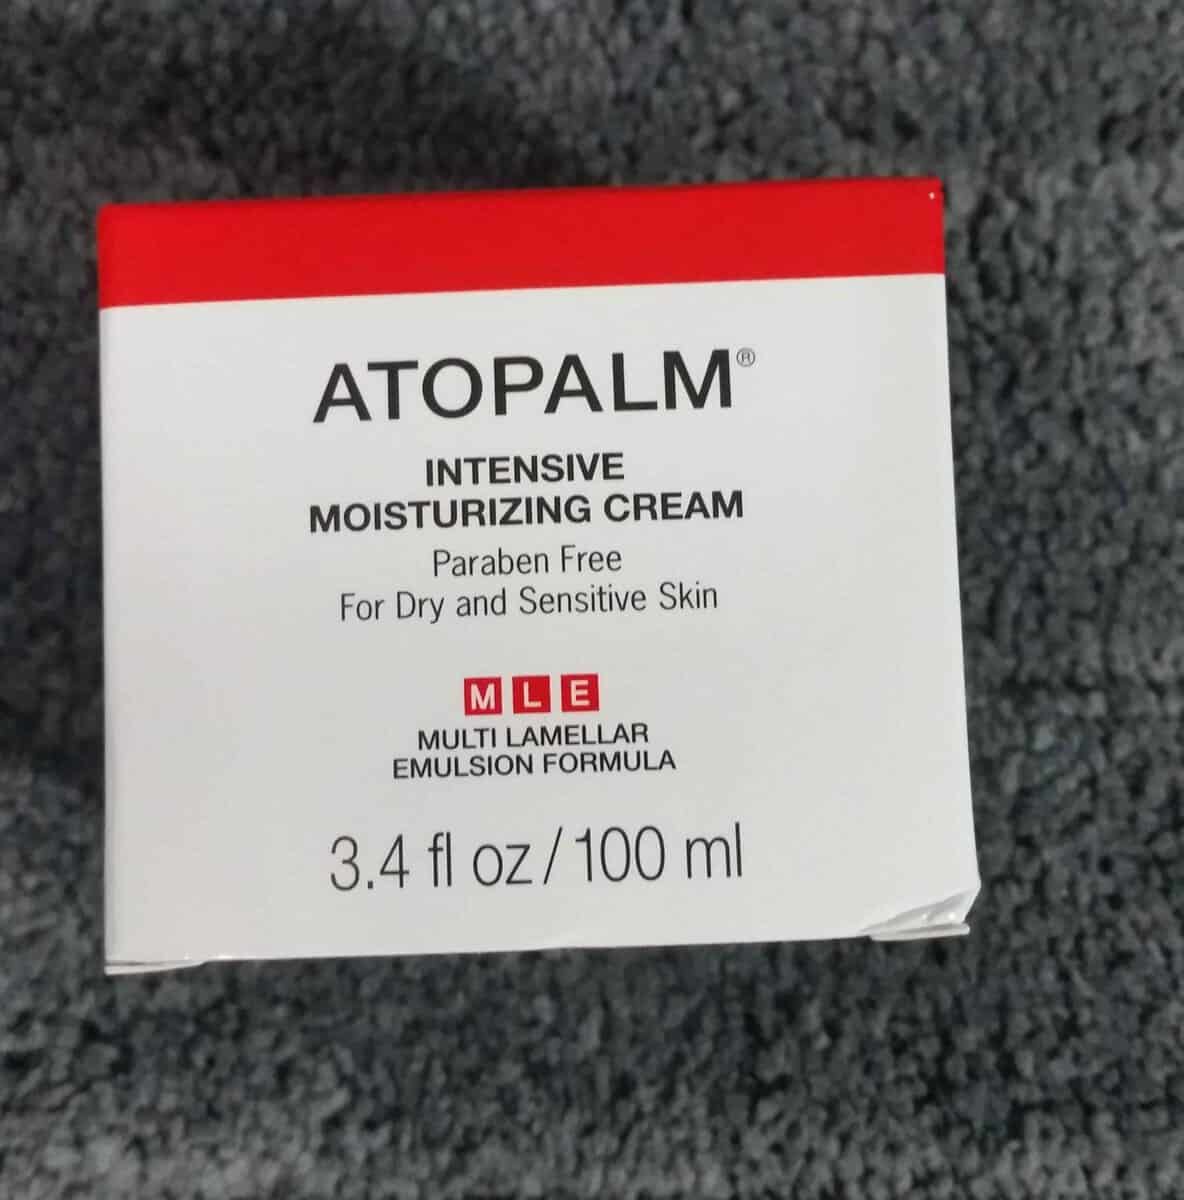 Atopalm Intensive Moisturizing Cream box